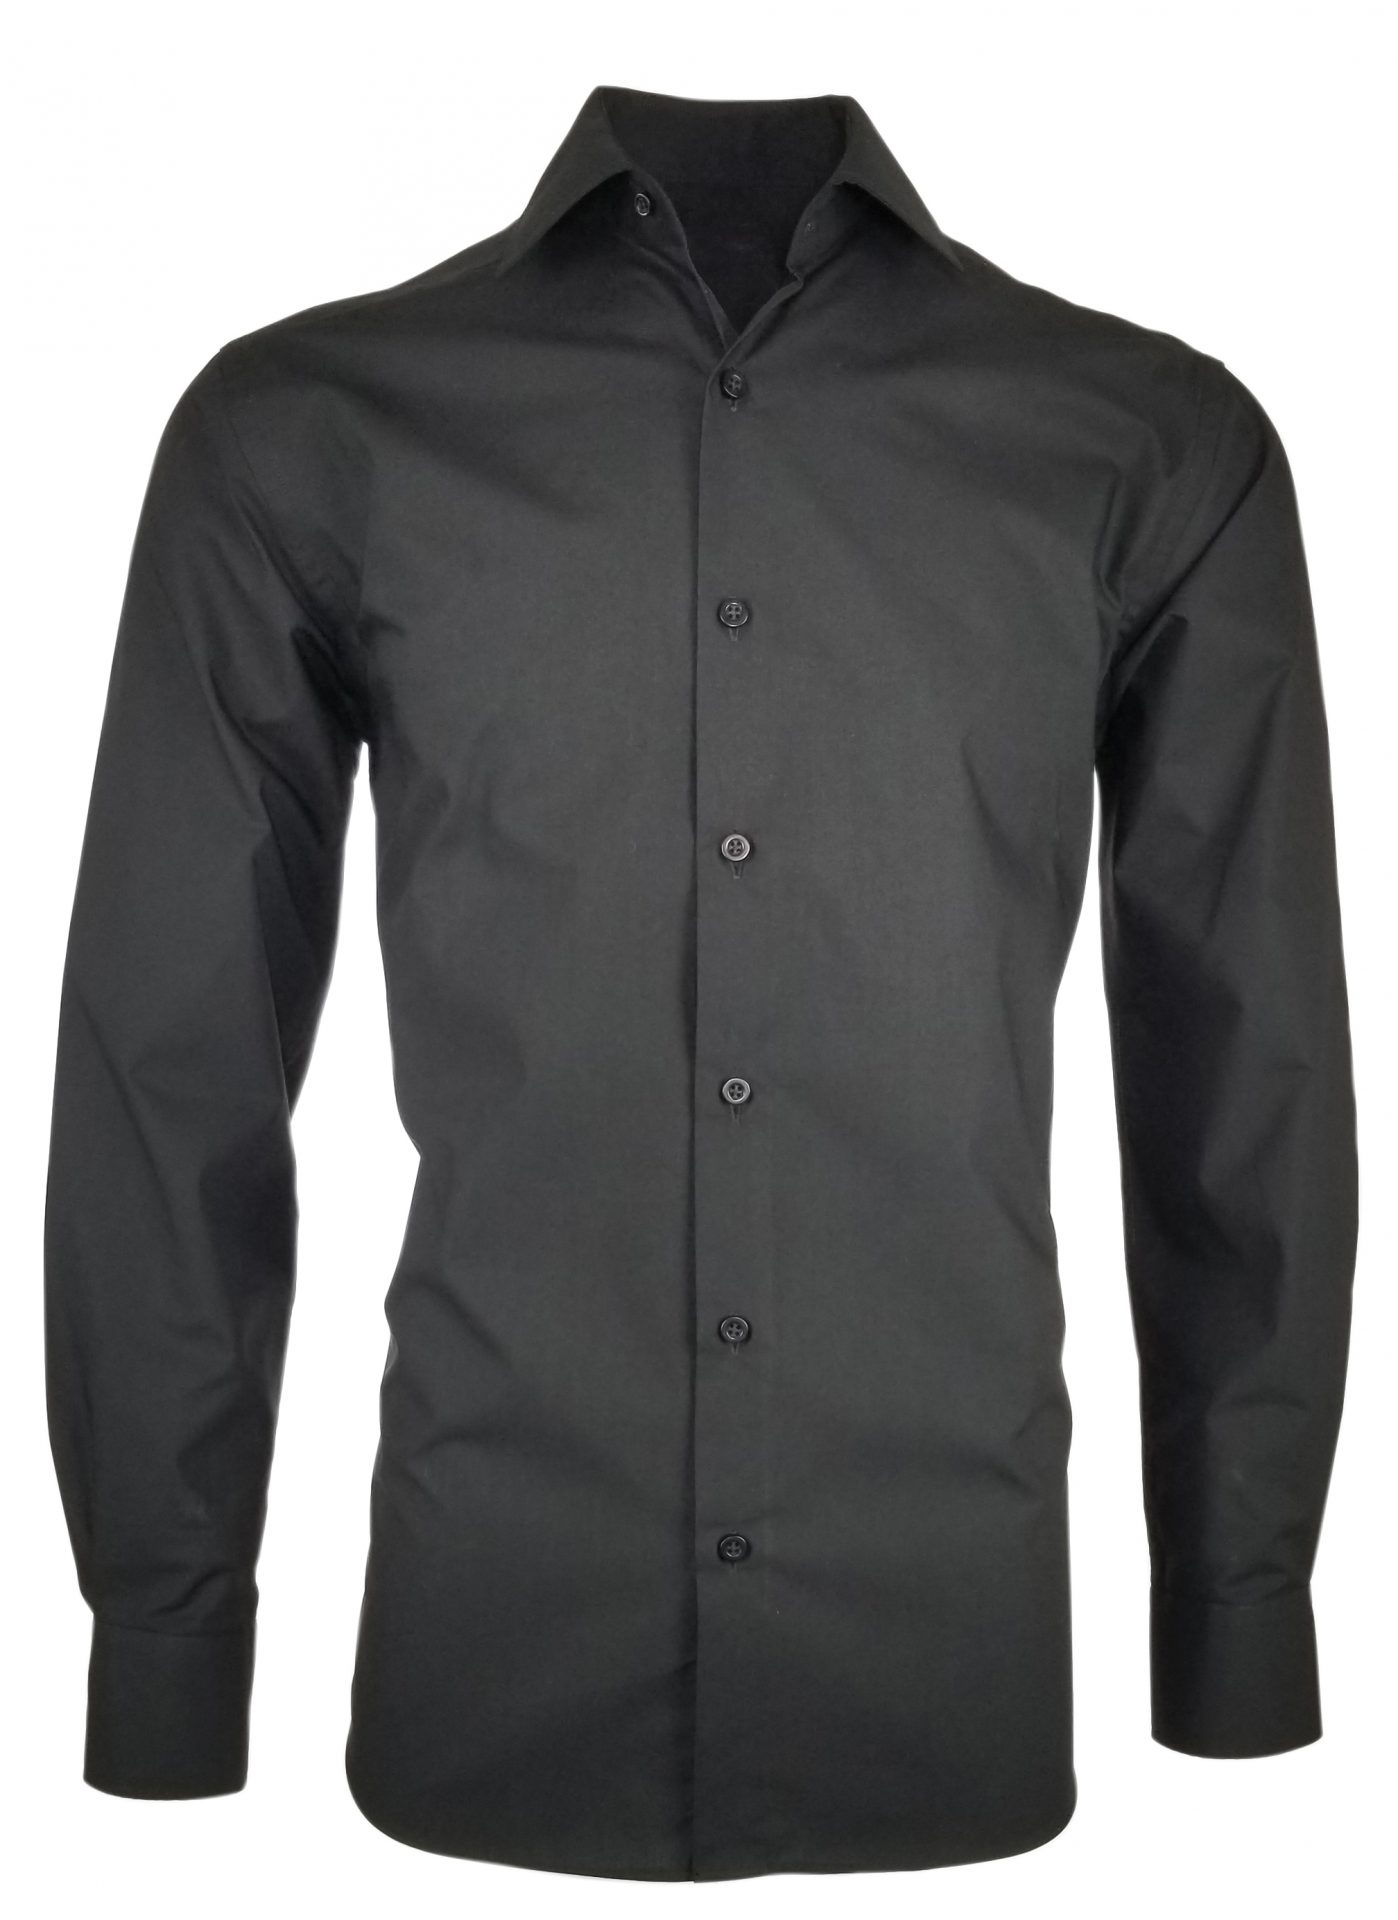 Men's Everyday Basic Shirt - Black Long Sleeve - Uniform Edit